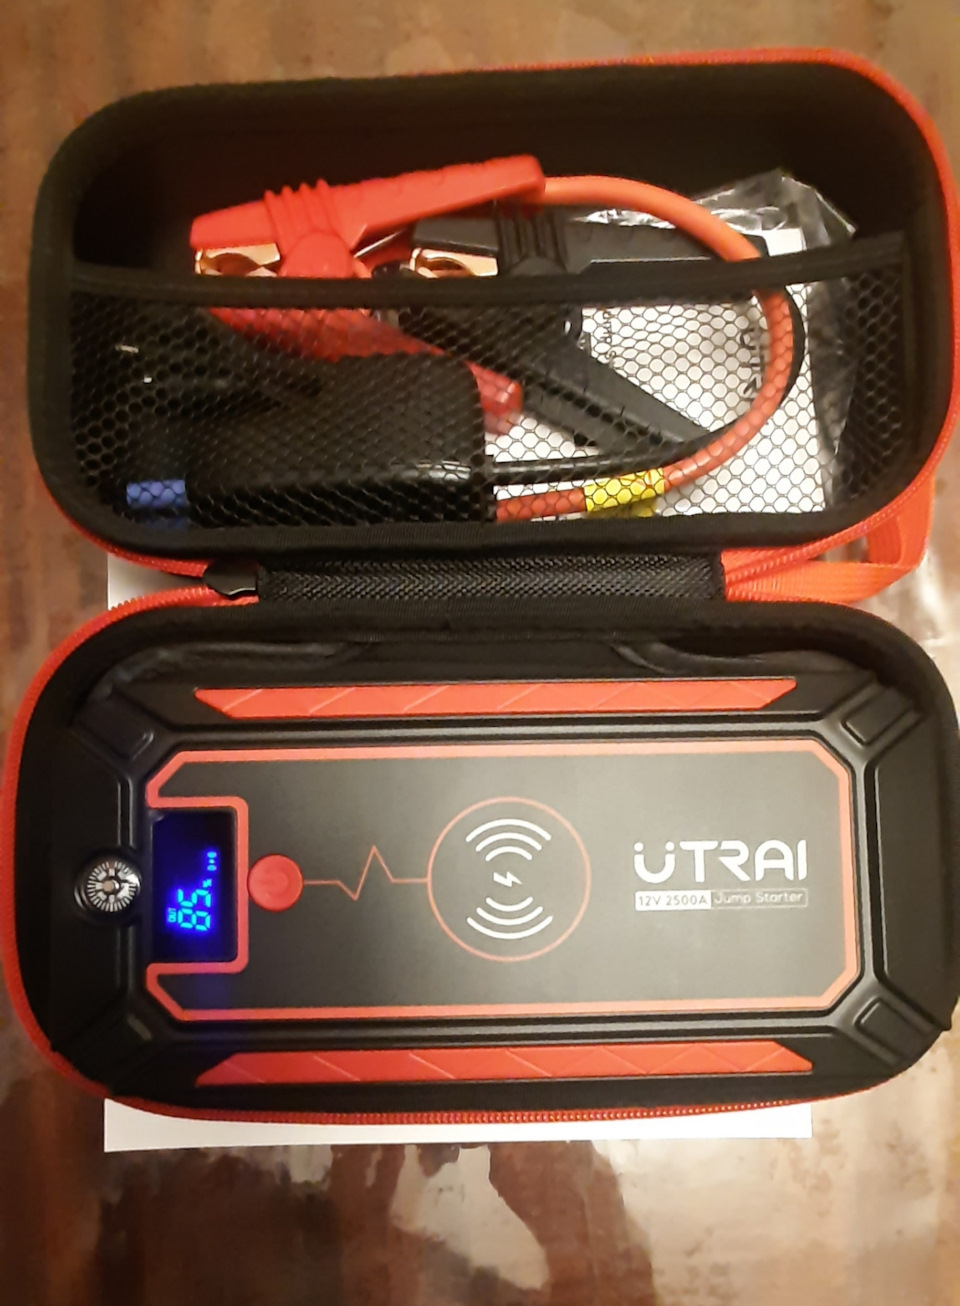 Пуско-зарядное устройство для автомобиля UTRAI Jump Starter Jstar 4 2500A